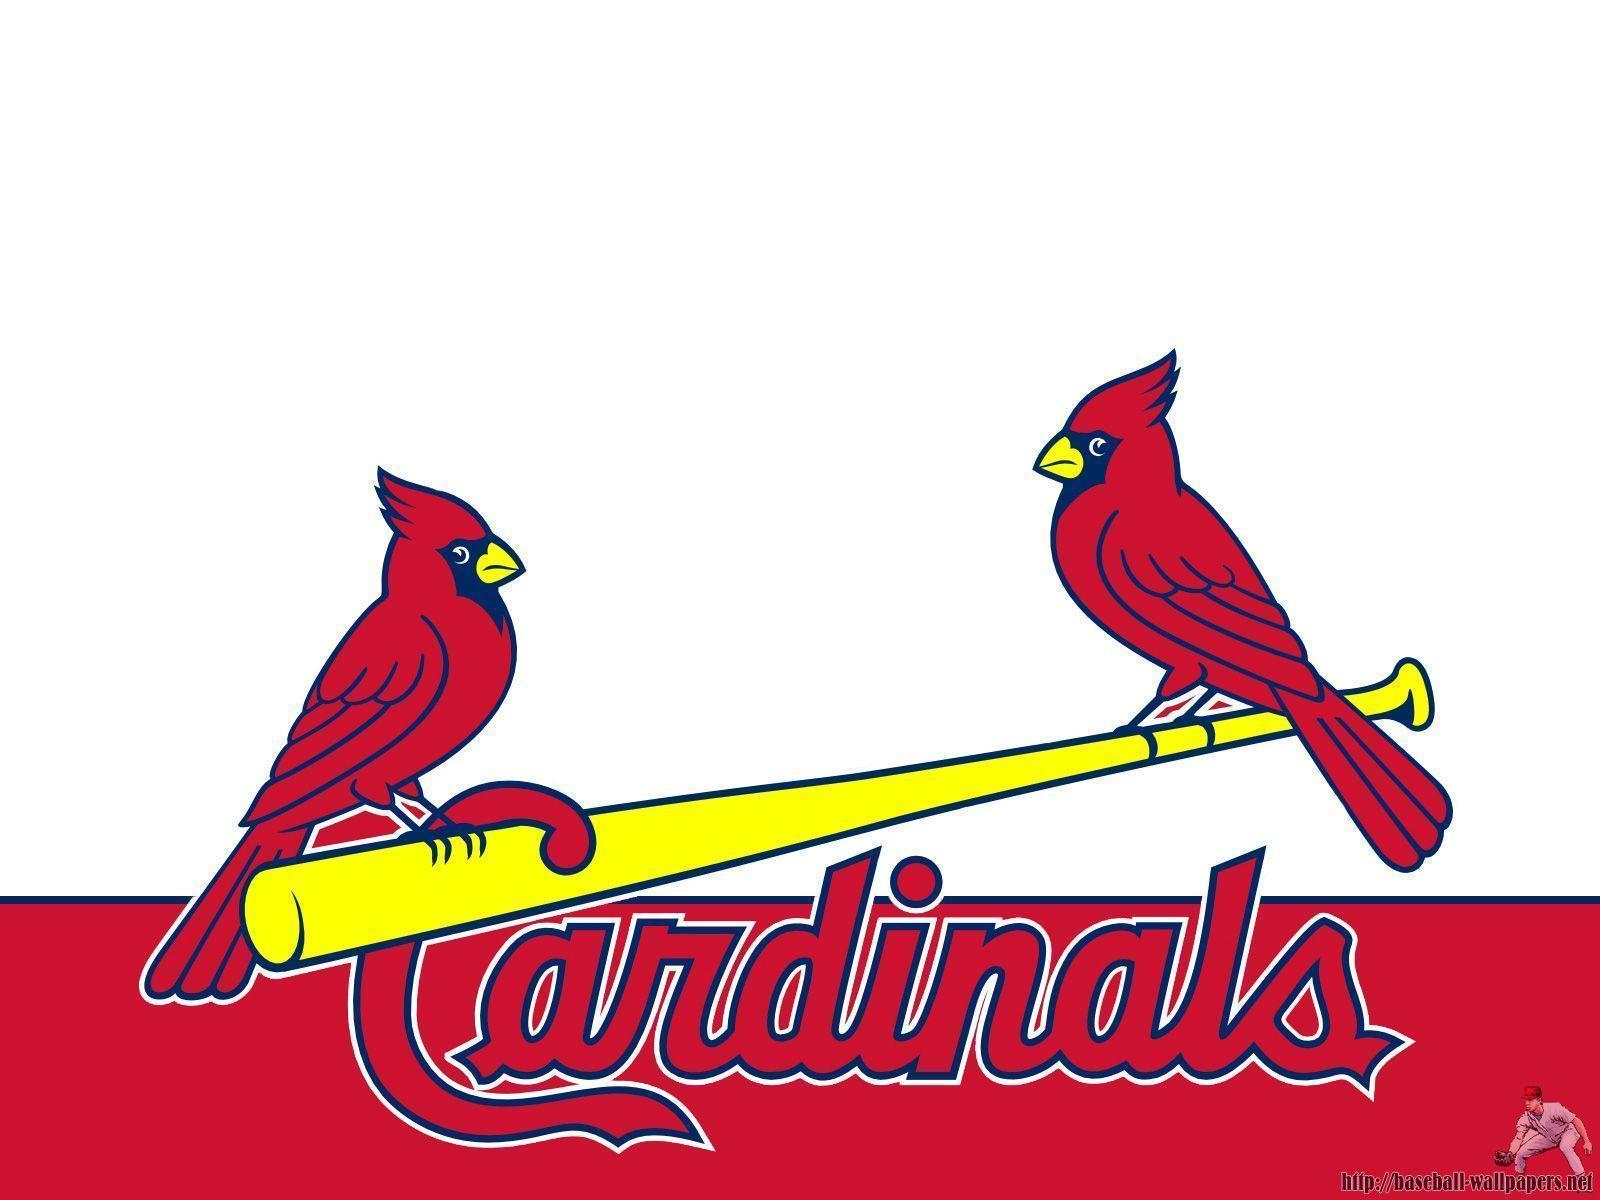 STL Cardinals Baseball Desktop Wallpaper. Baseball Wallpaper